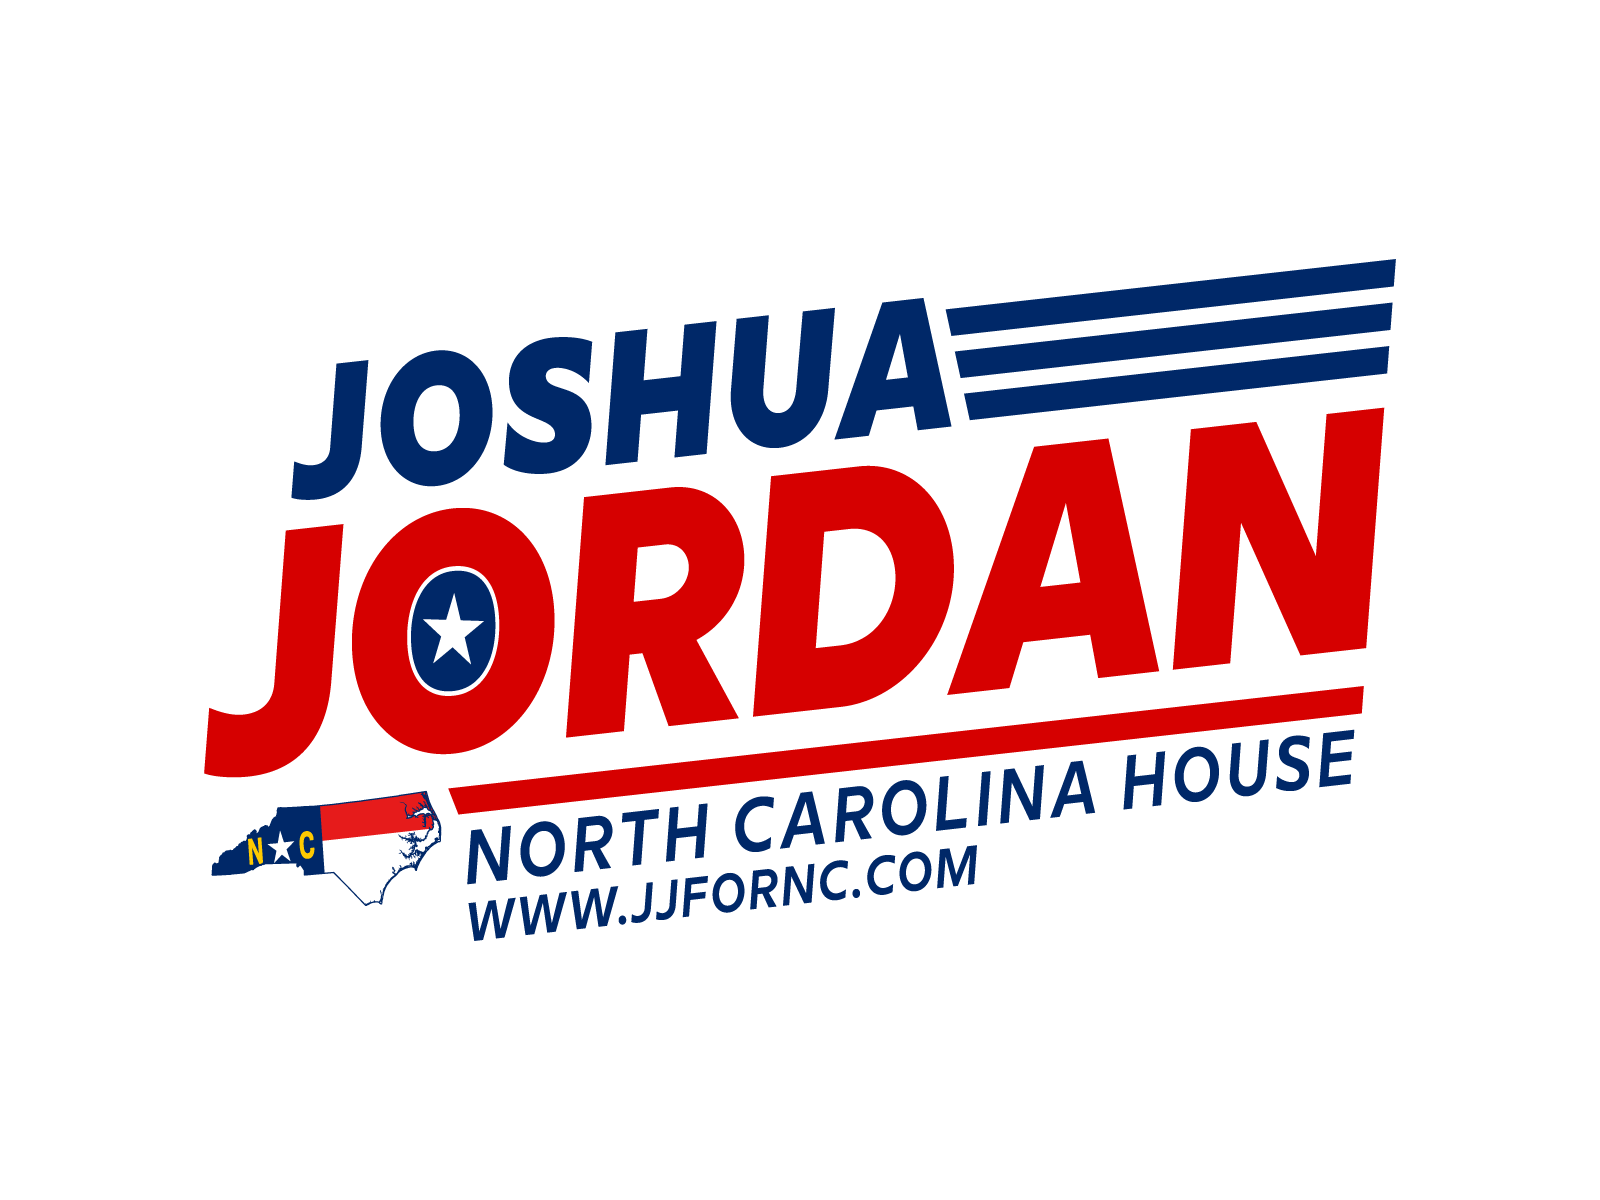 Joshua Jordan for North Carolina House